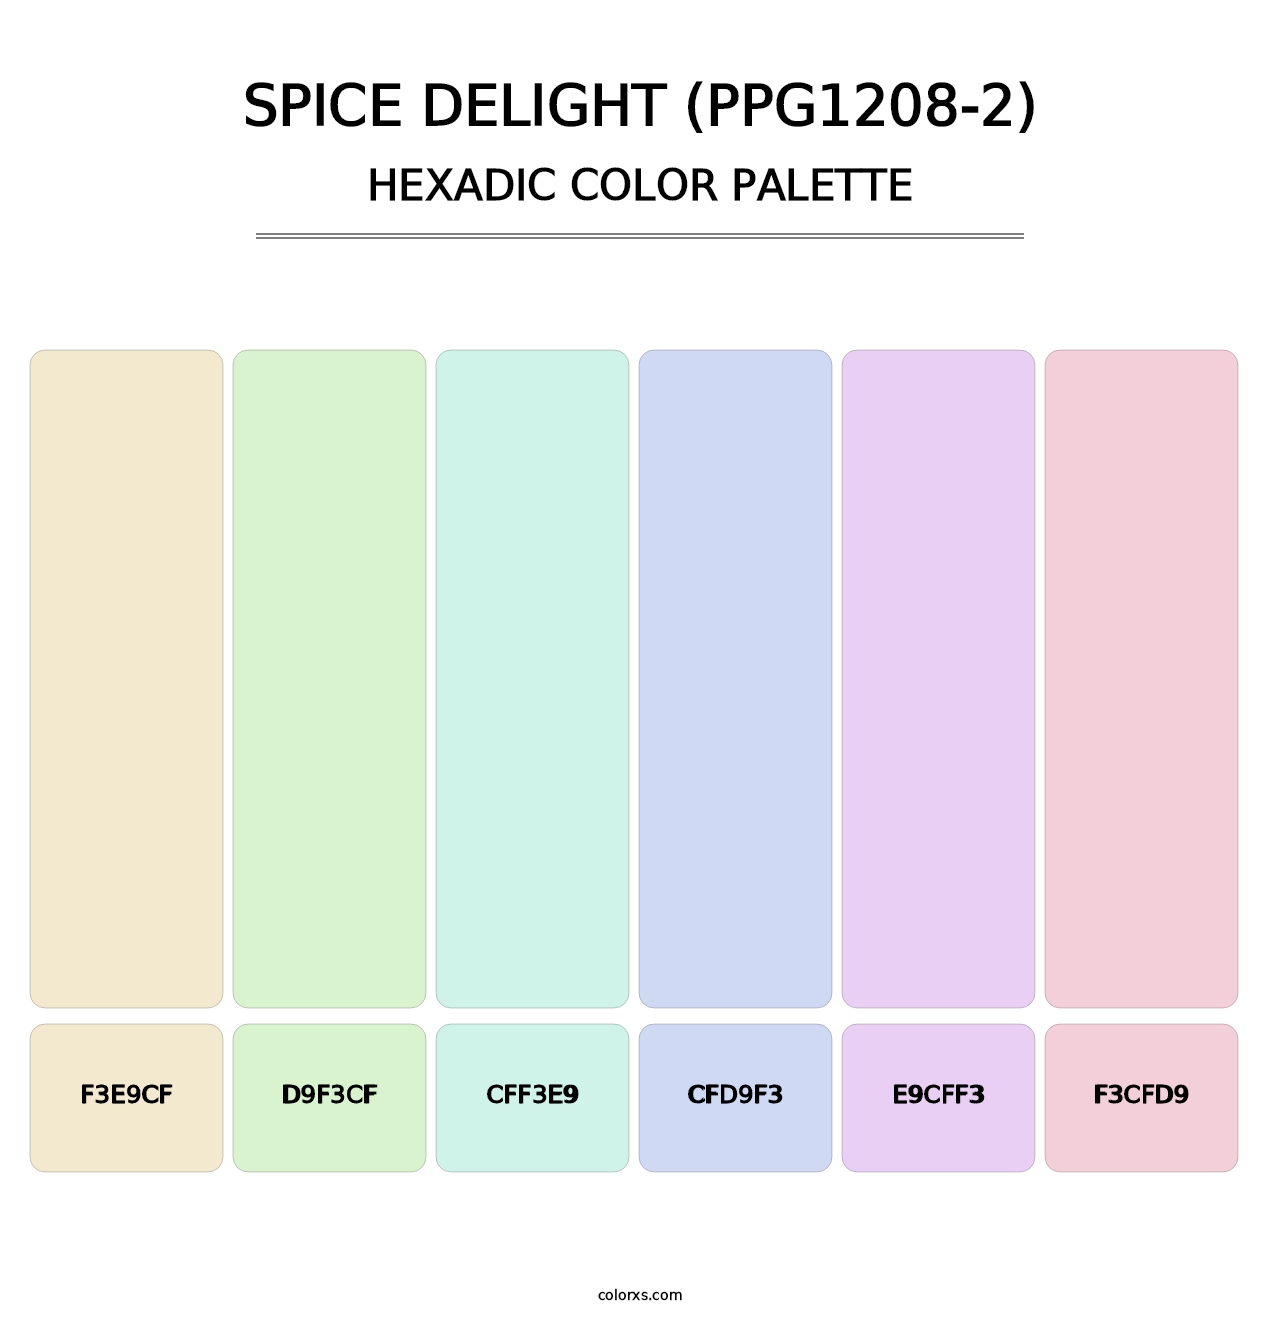 Spice Delight (PPG1208-2) - Hexadic Color Palette